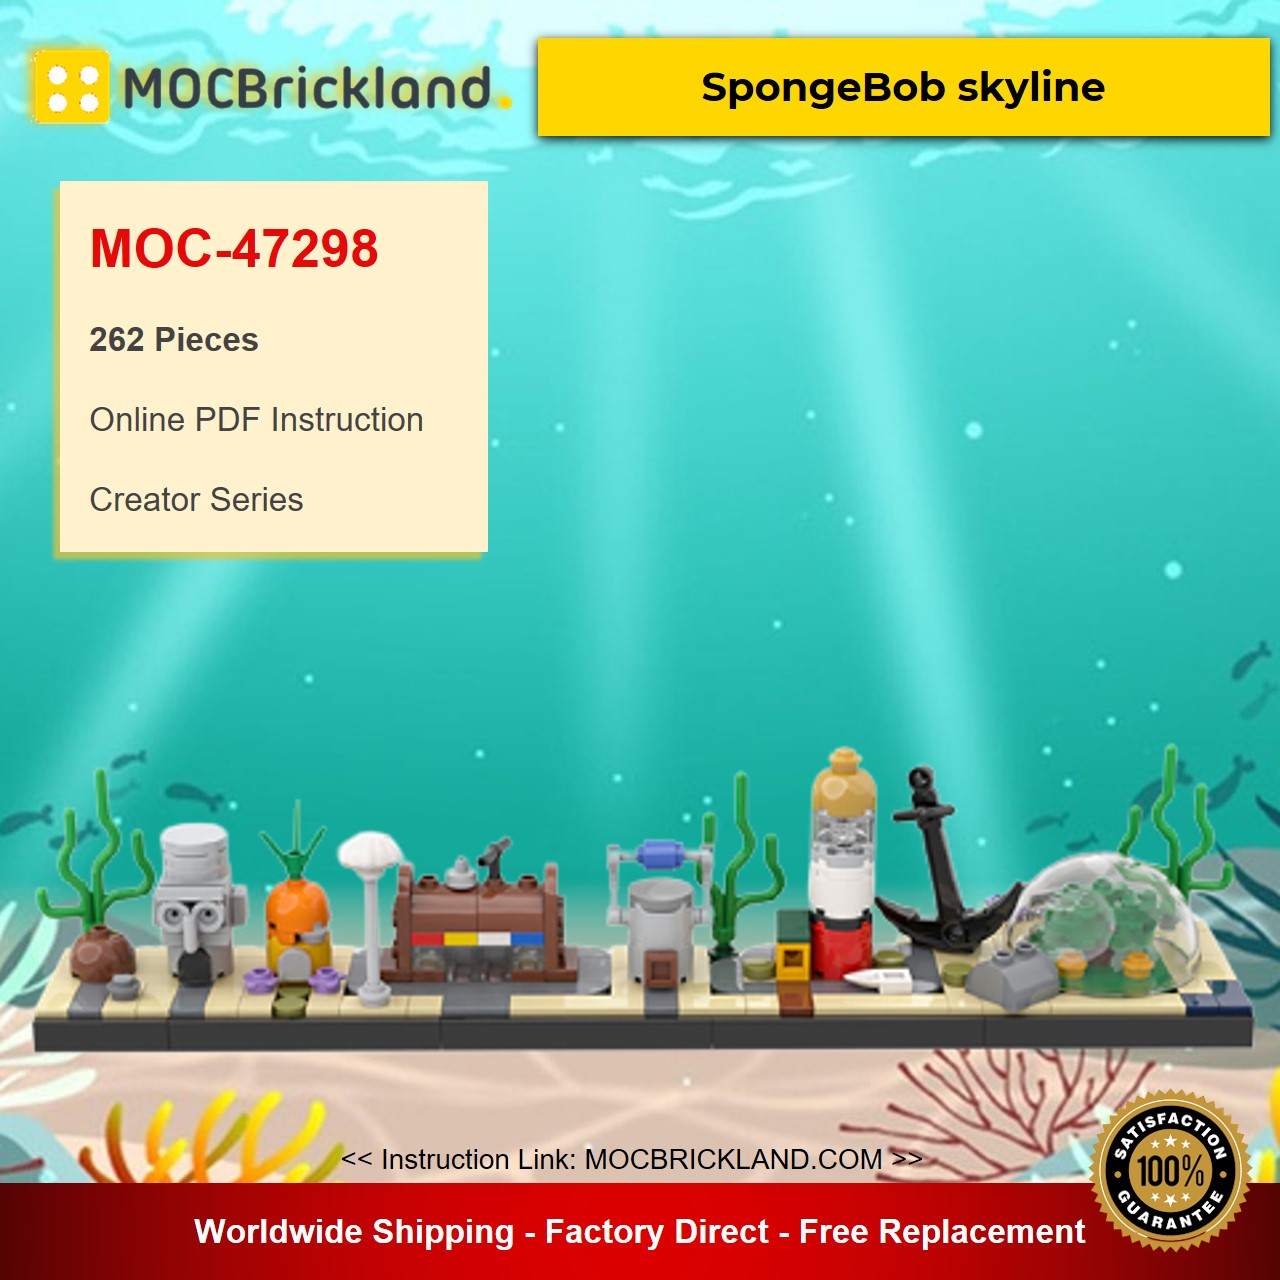 SpongeBob skyline MOC-47298 Creator Designed By benbuildslego With 262 Pieces 